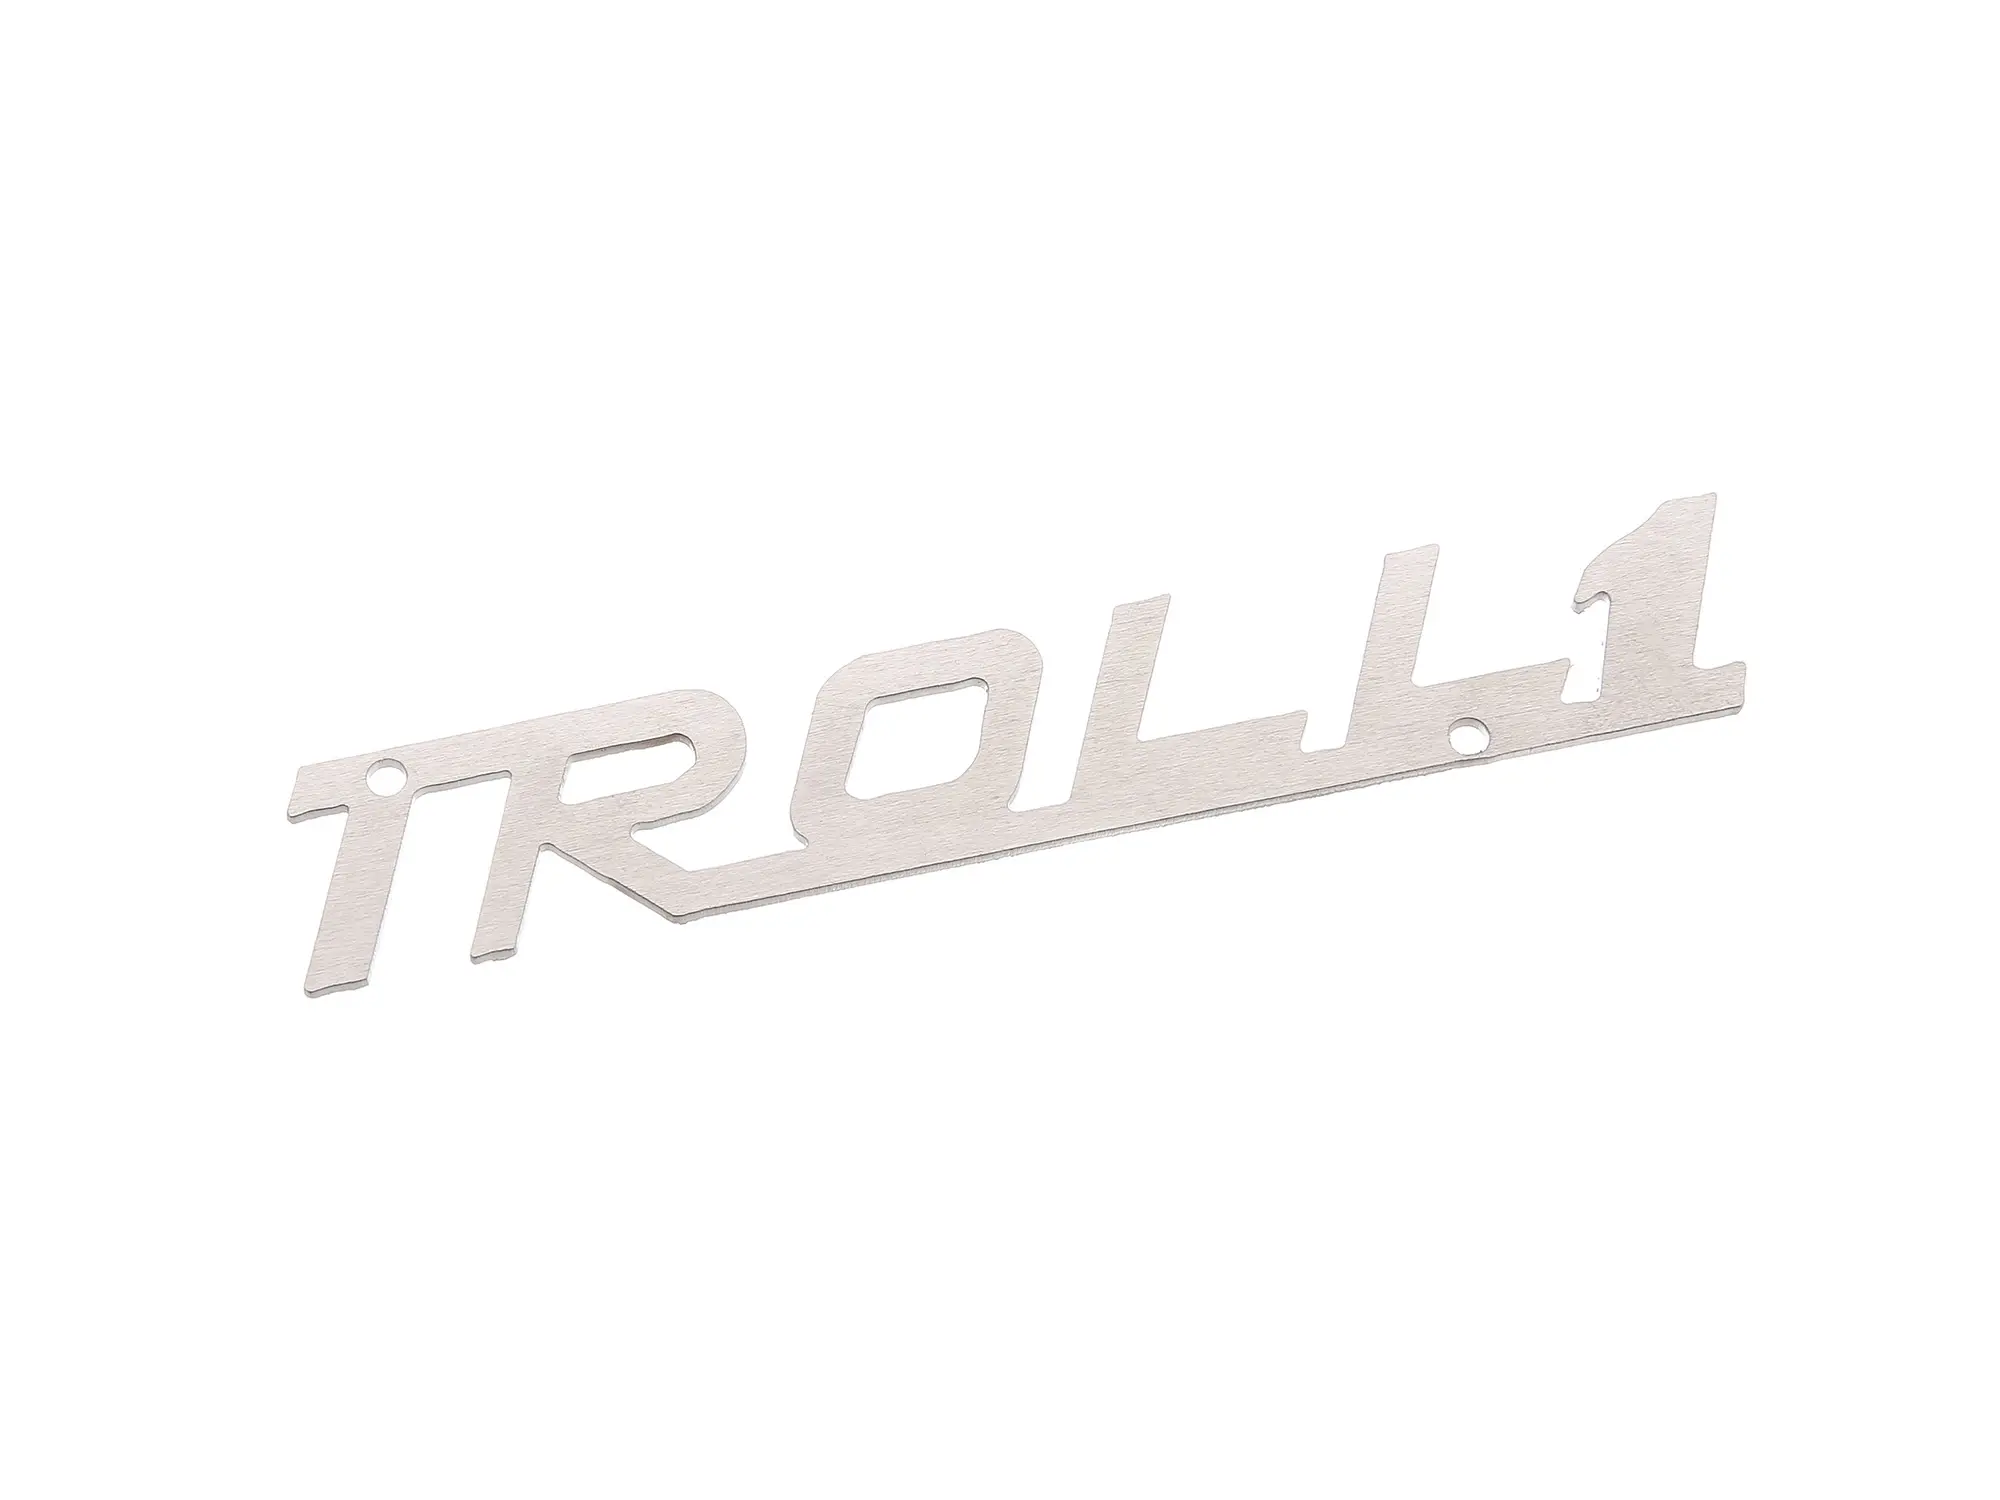 Schriftzug "TROLL1" (Plakette aus Aluminium) - für IWL TR150 Troll, Art.-Nr.: 10067812 - Bild 1